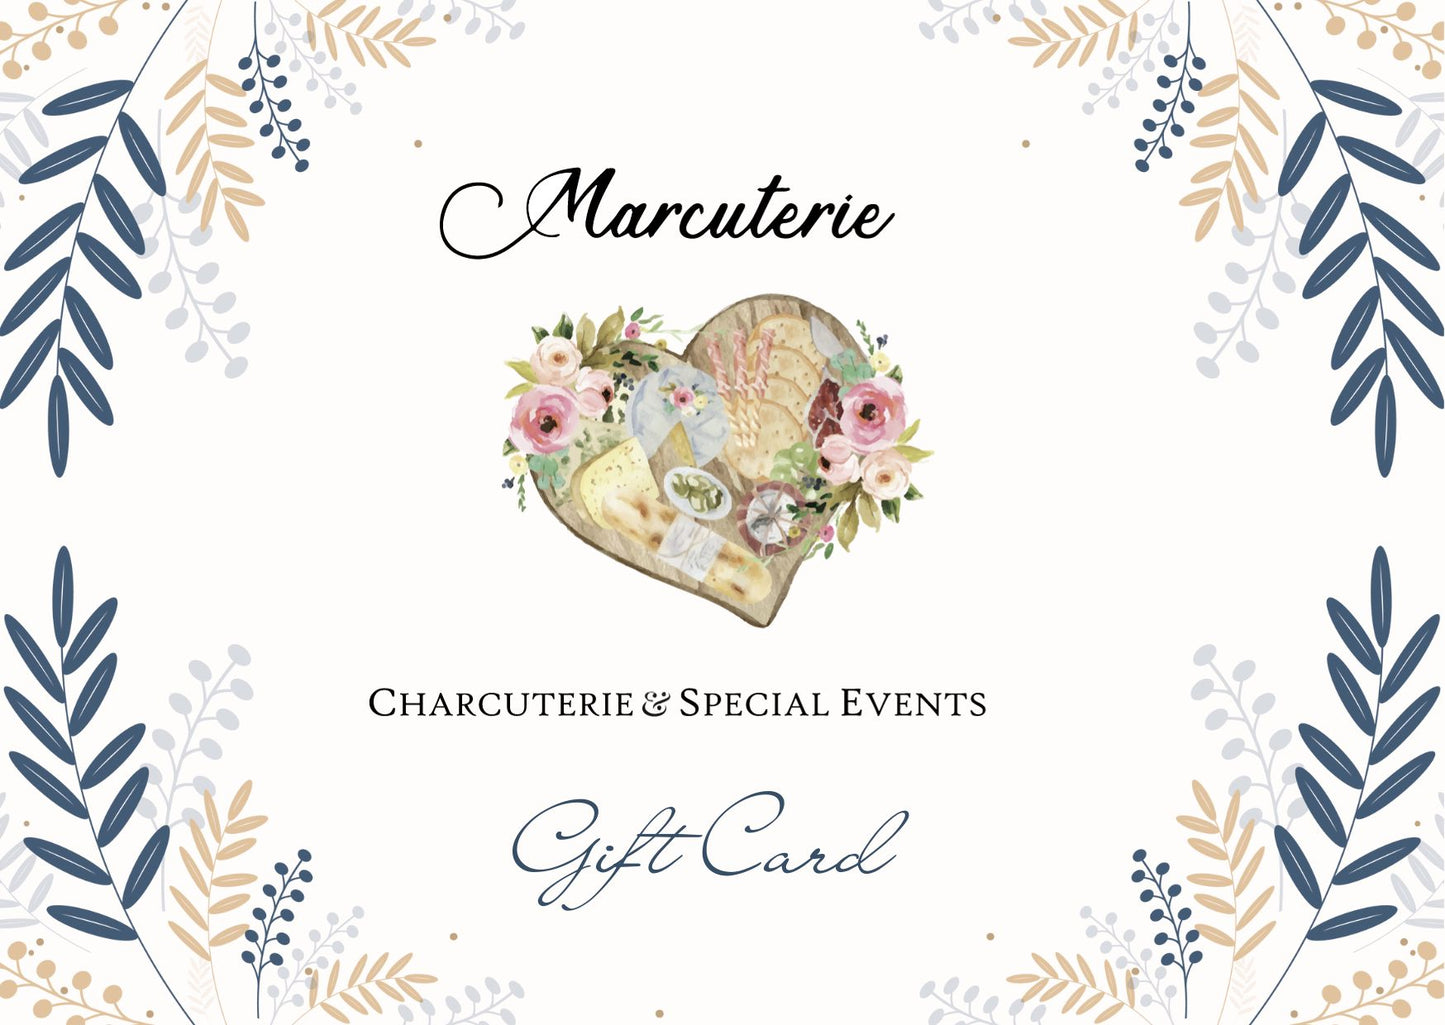 Marcuterie Gift Card